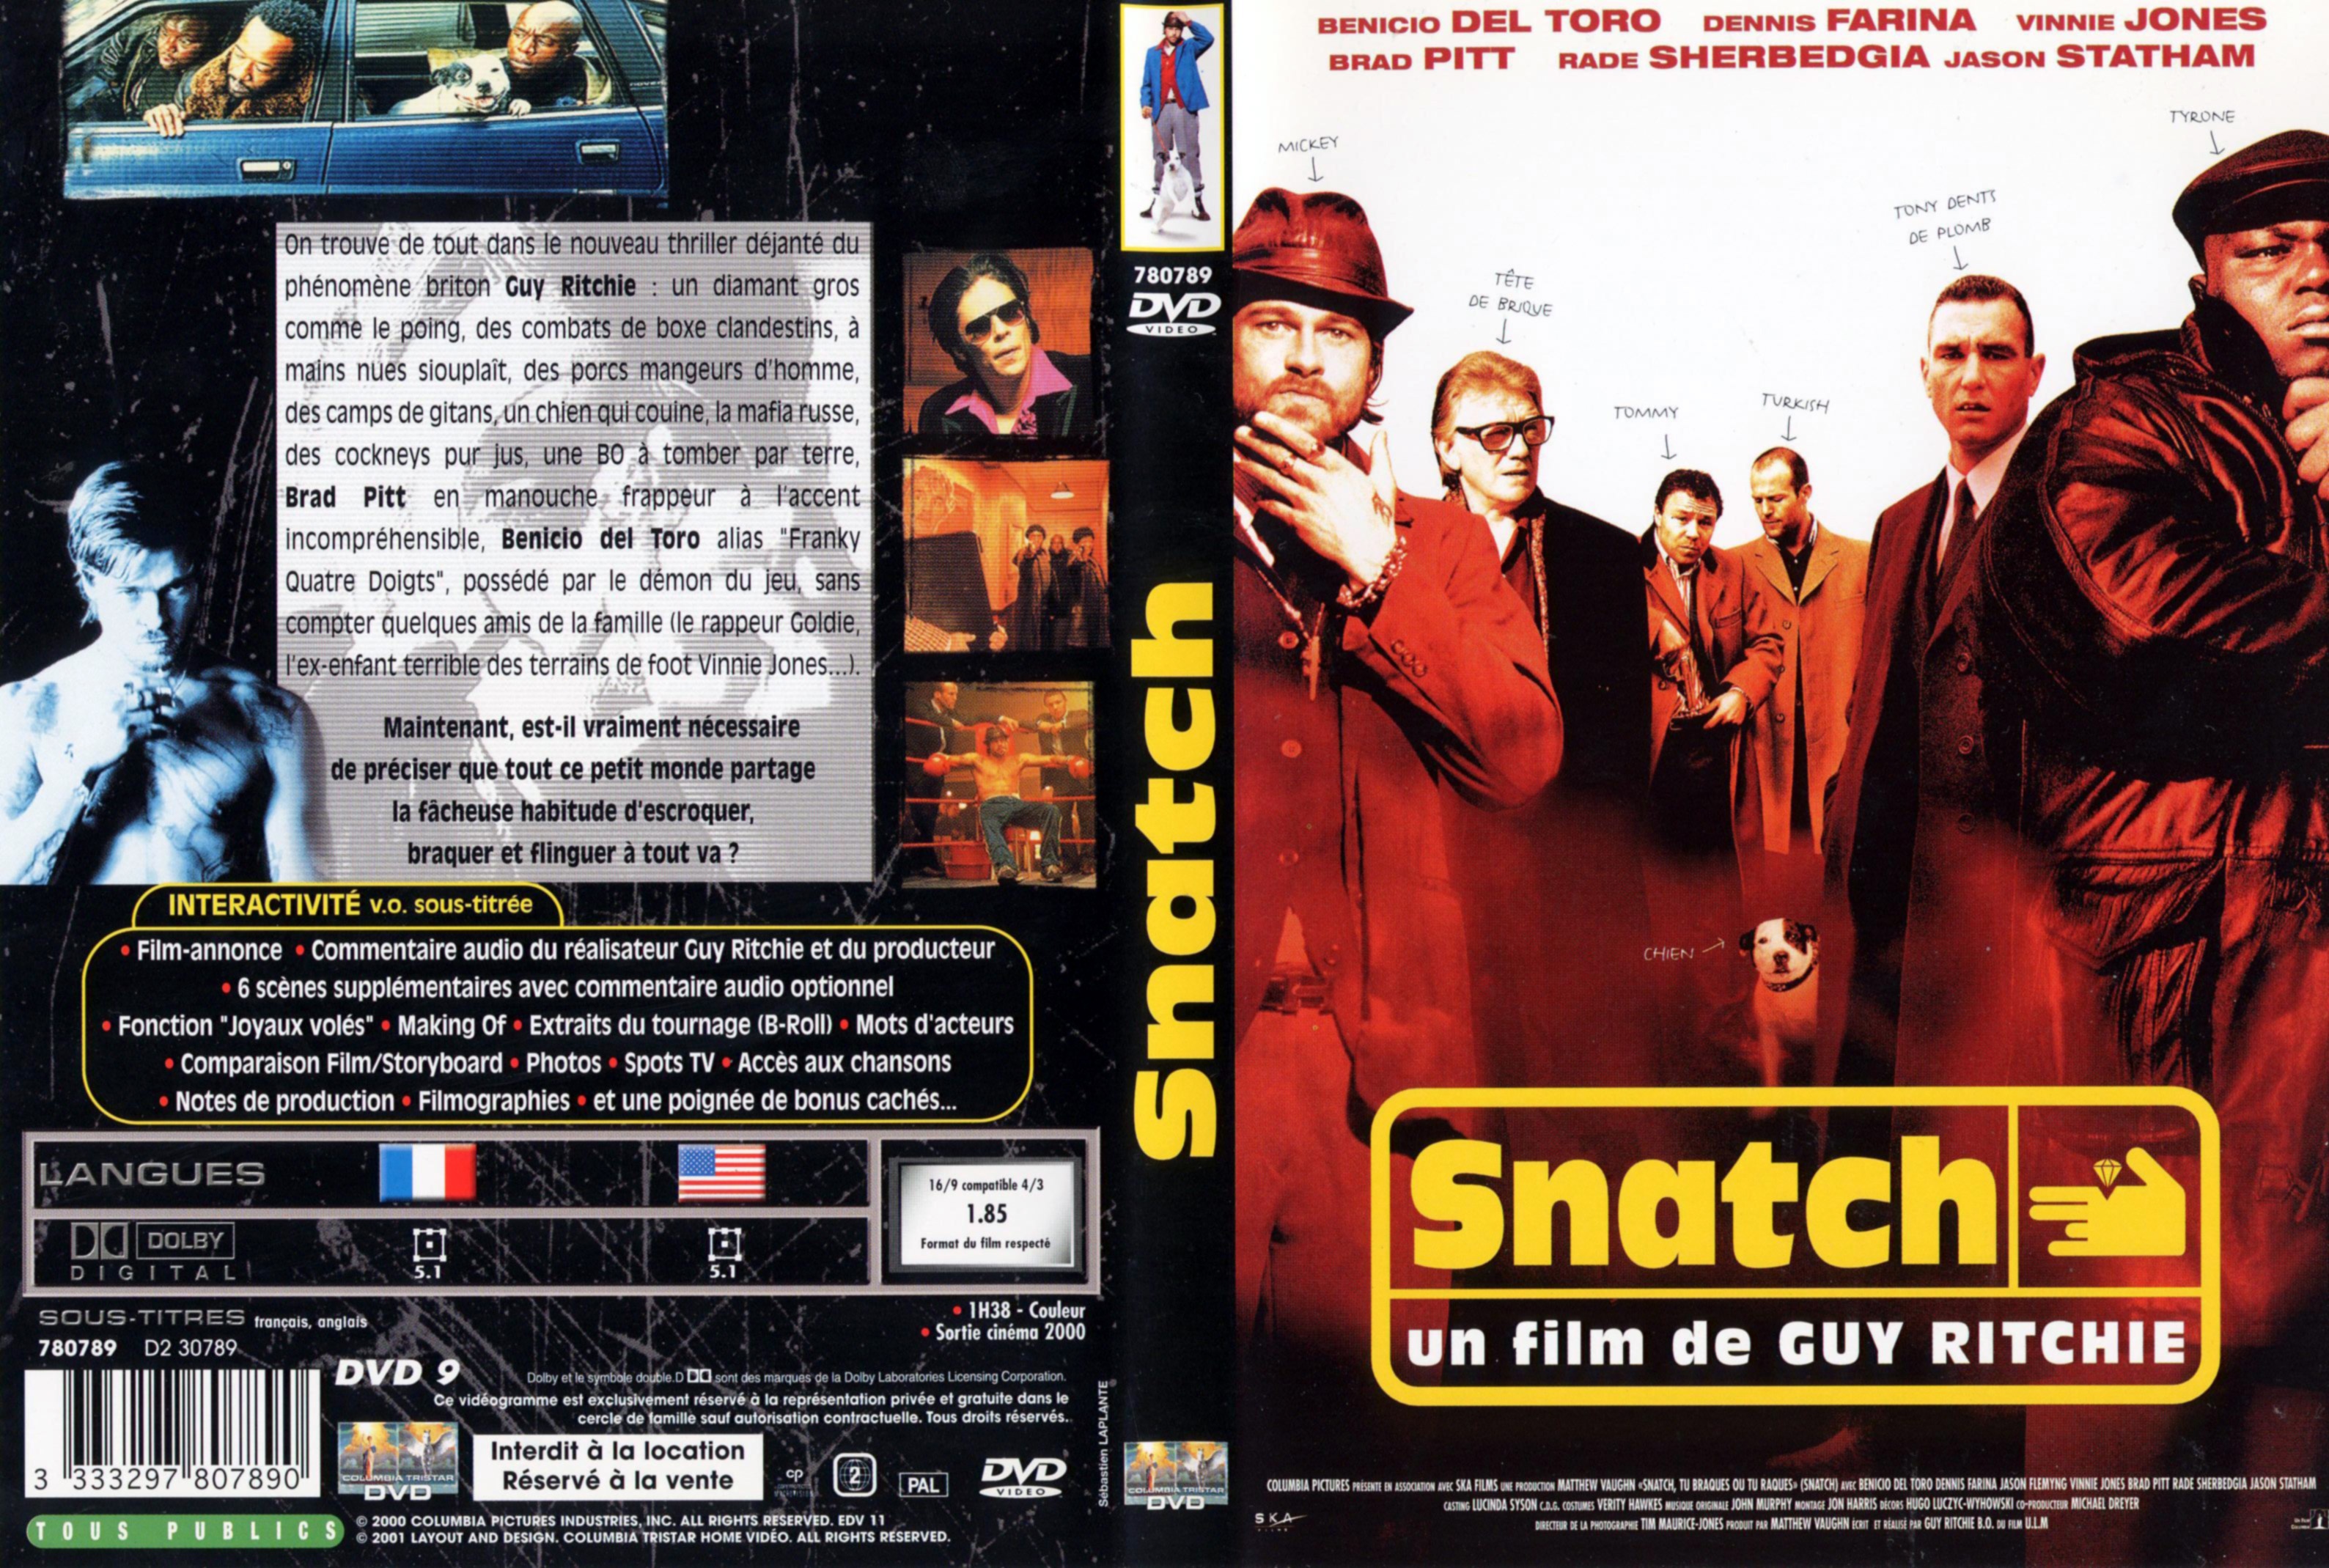 Jaquette DVD Snatch v2